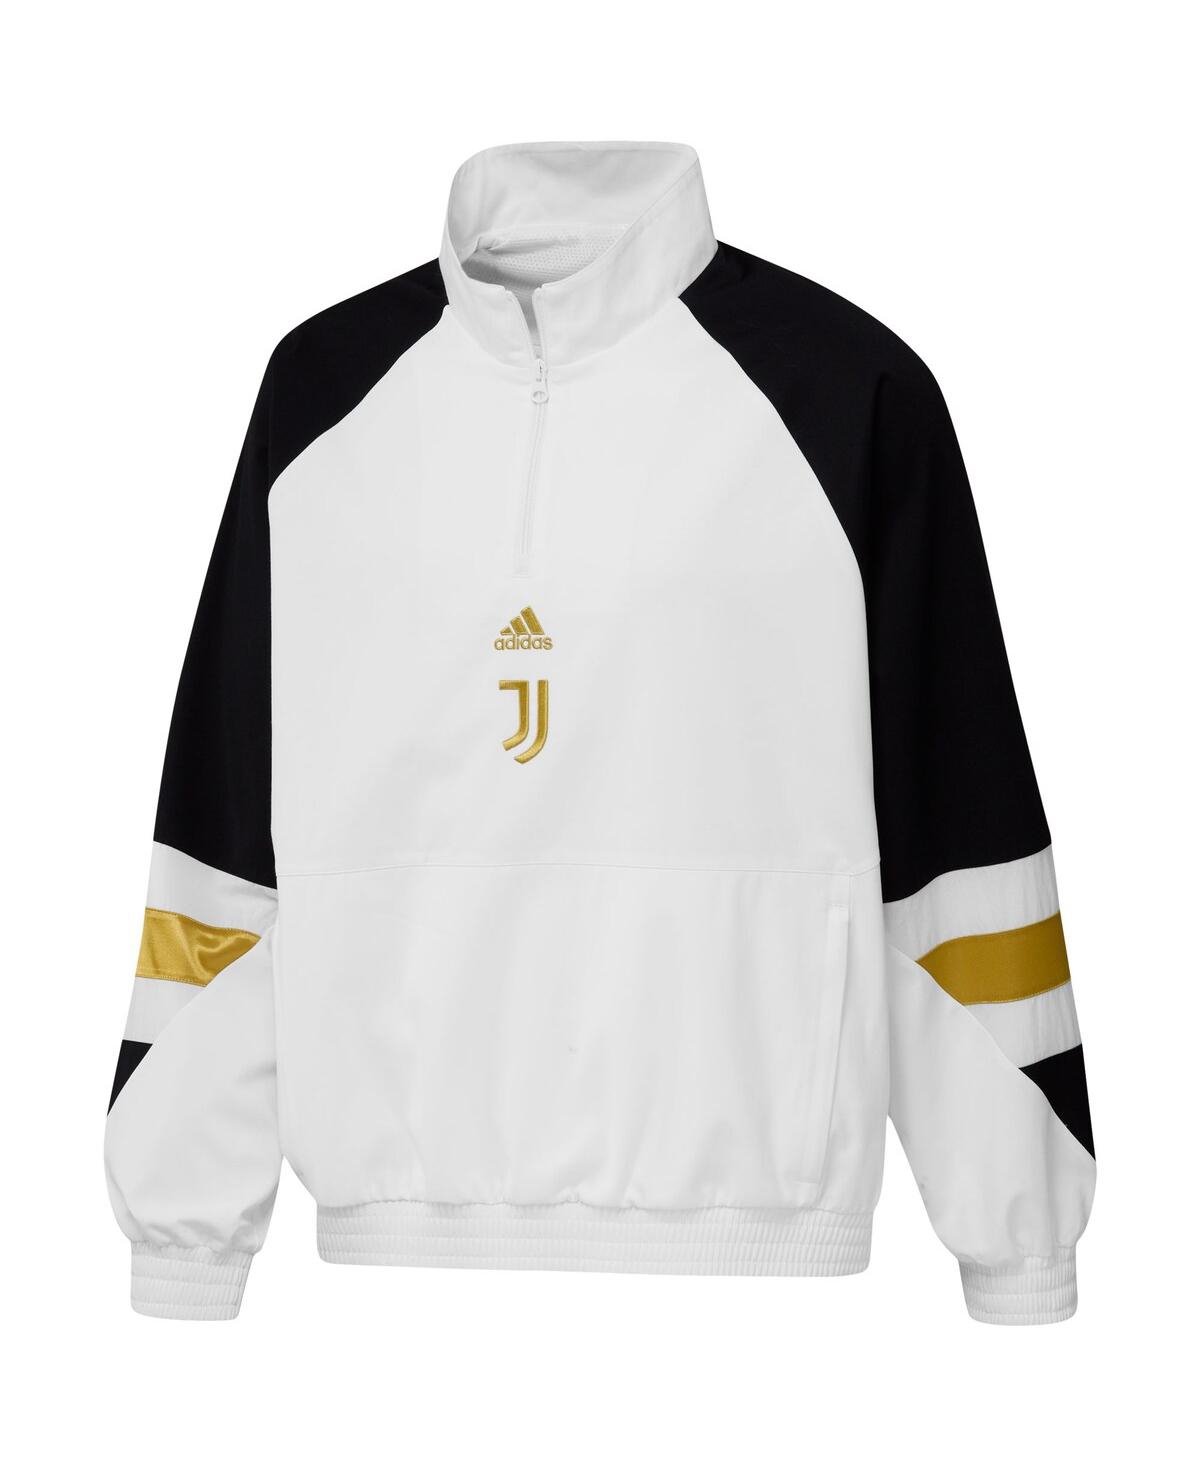 Shop Adidas Originals Men's Adidas White Juventus Football Icon Raglan Quarter-zip Top